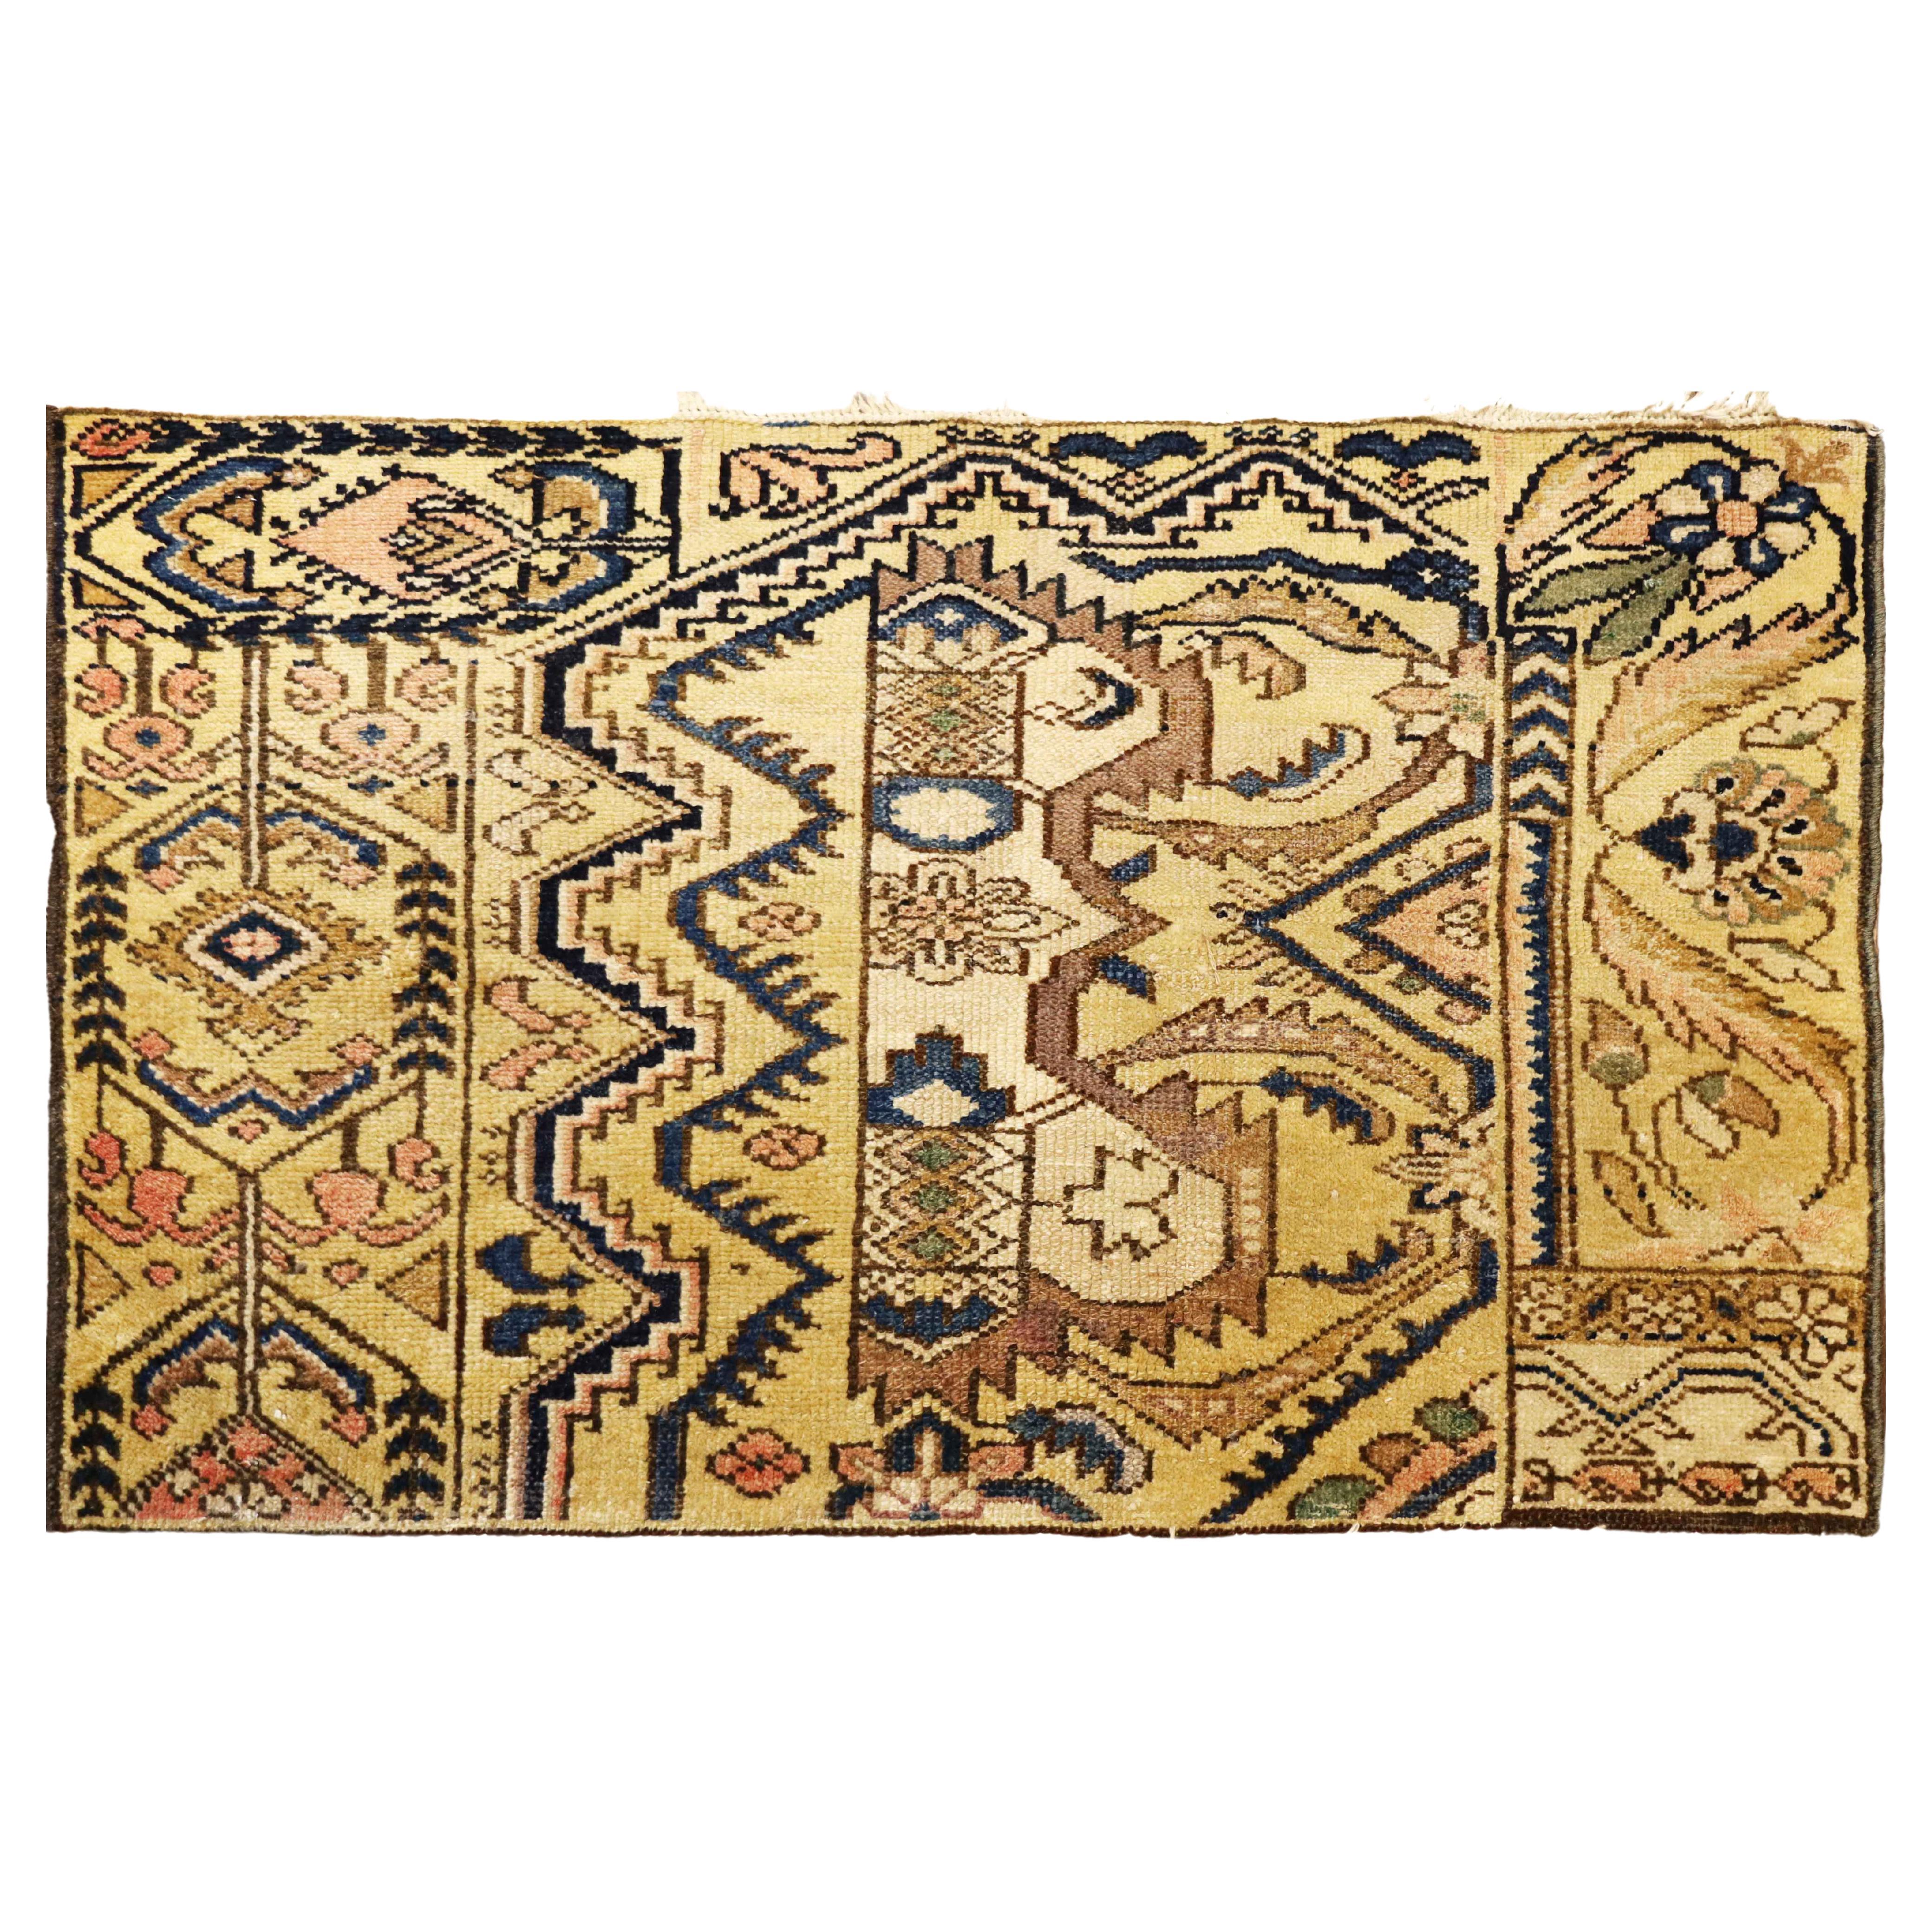 Antique Bakhtiari Sampler Rug, Great Colors